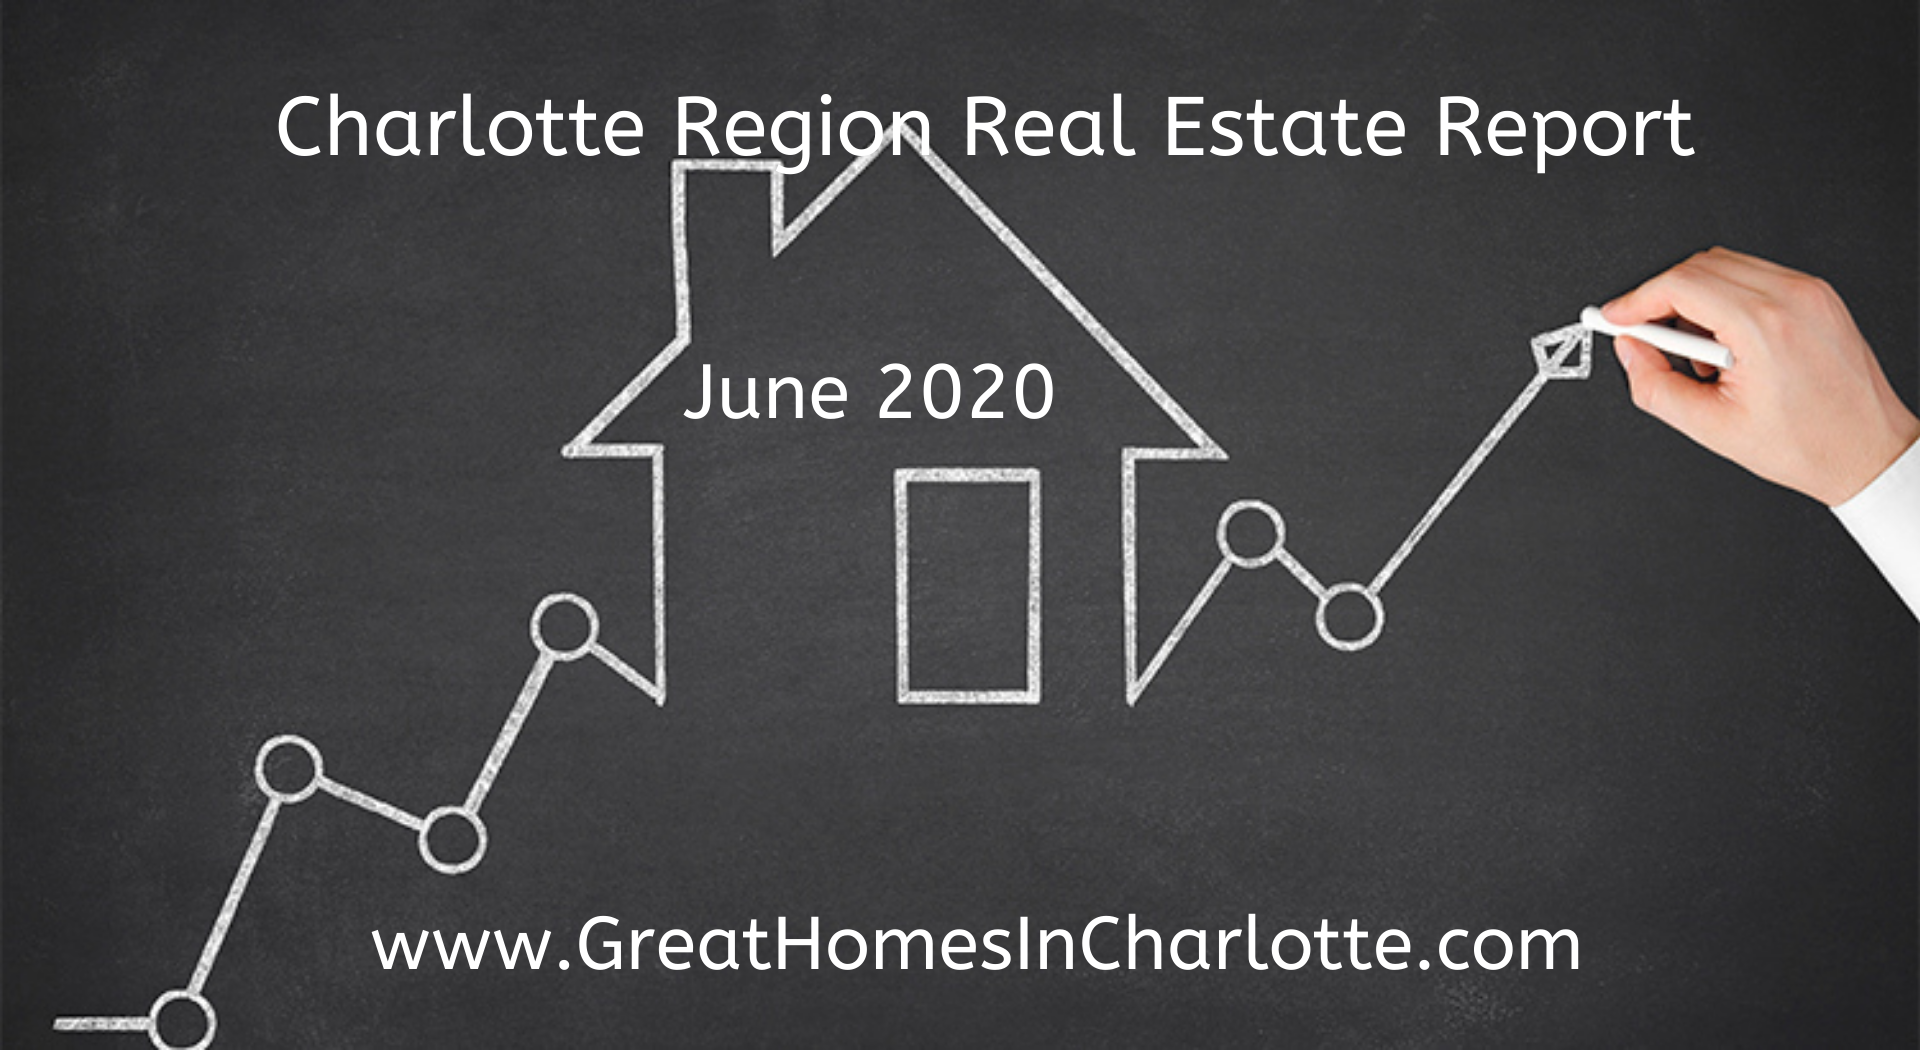 Charlotte Region Real Estate Report: June 2020